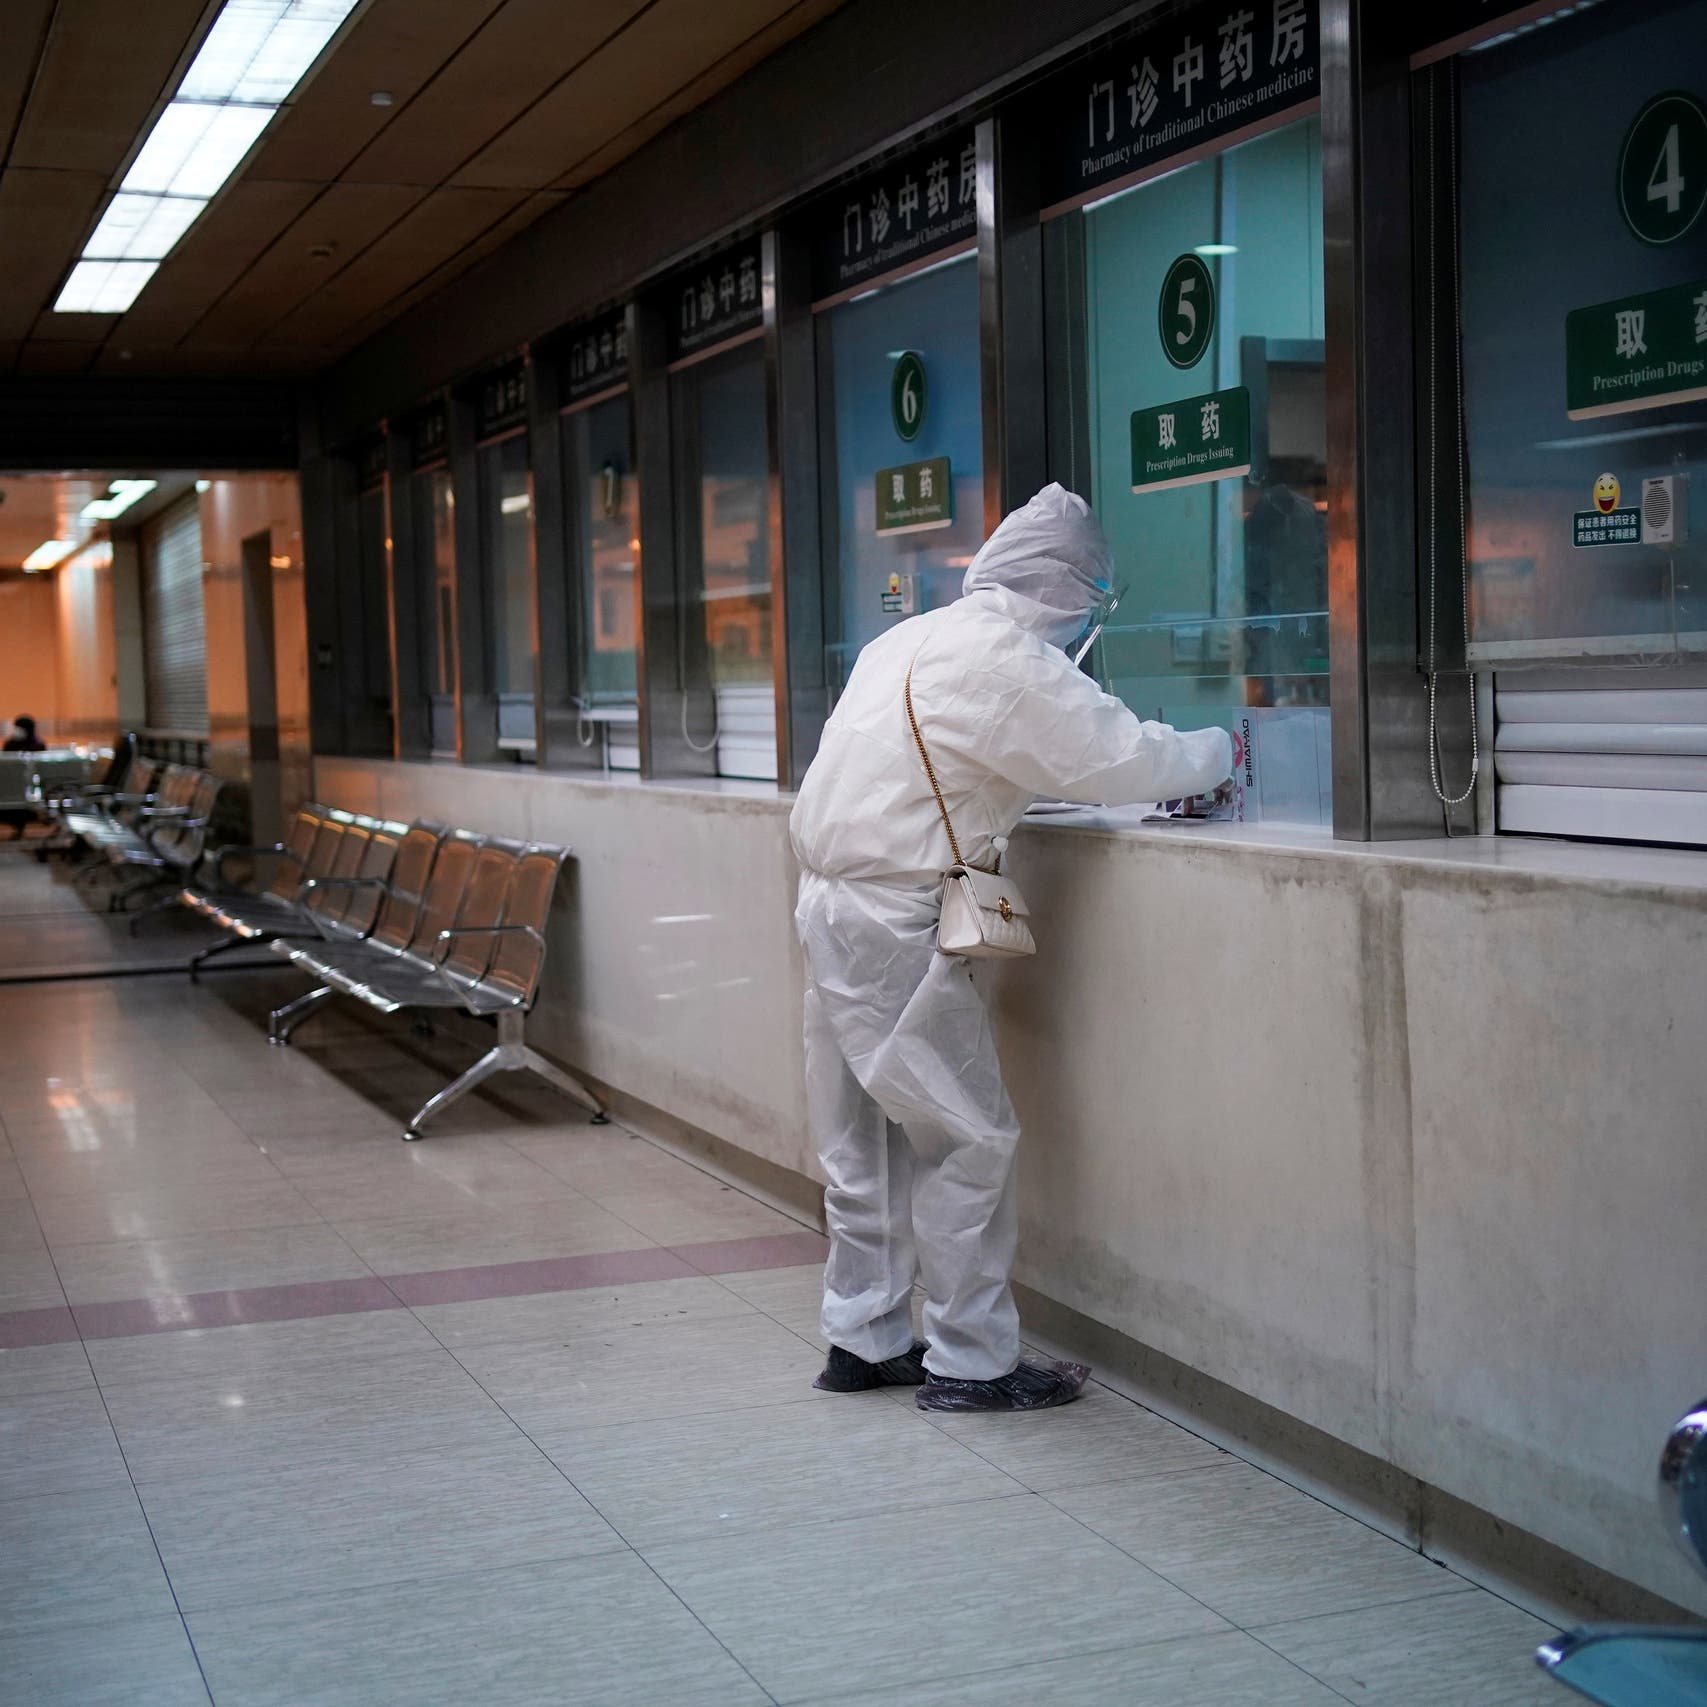 Millions under COVID-19 lockdown as China battles Delta variant outbreak